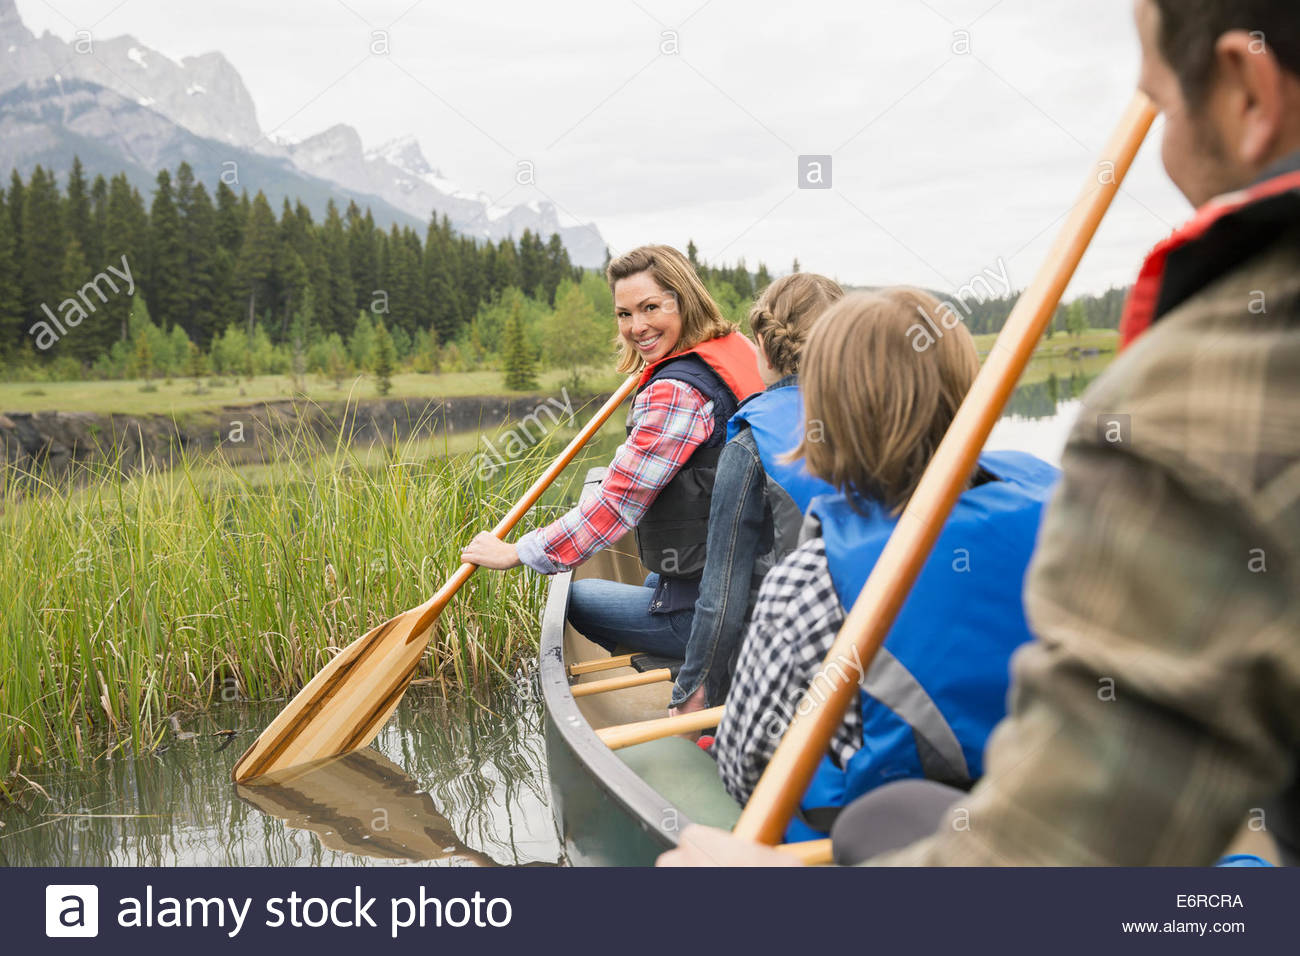 Familia de remo en canoa lago Foto de stock